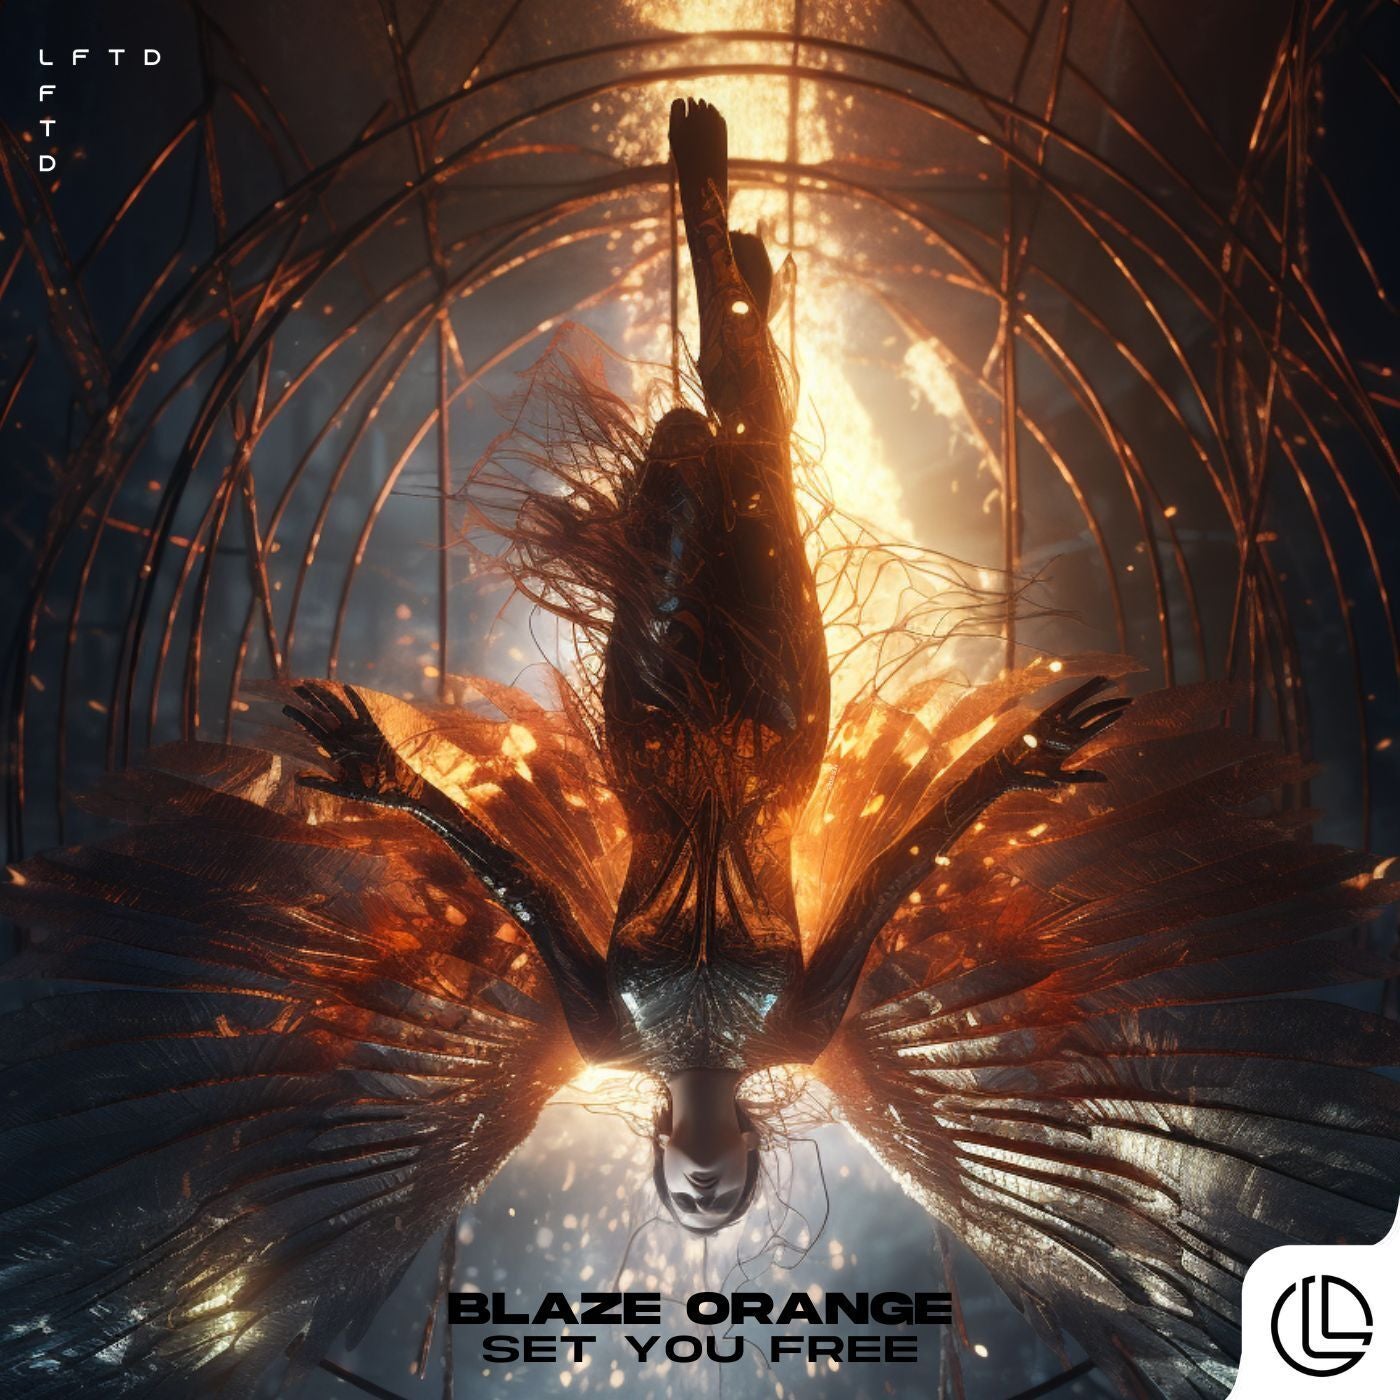 Blaze Orange Music & Downloads on Beatport